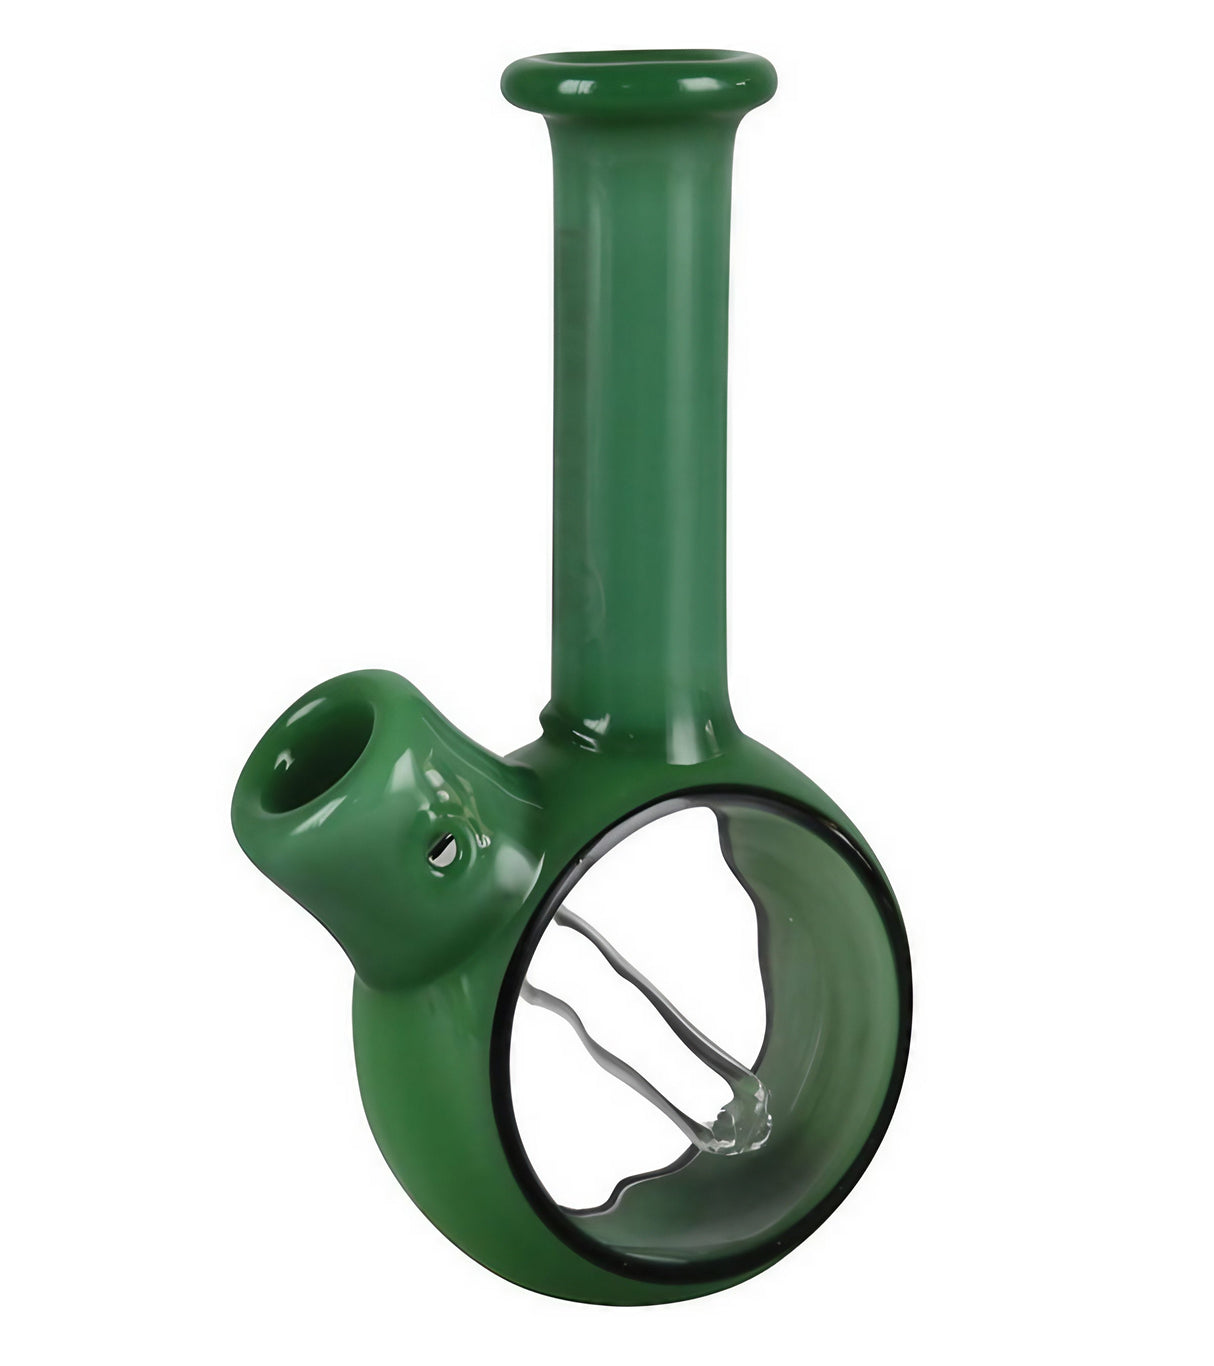 Pulsar Pocket Bubbler in green, compact 5.25" borosilicate glass, portable design, front view